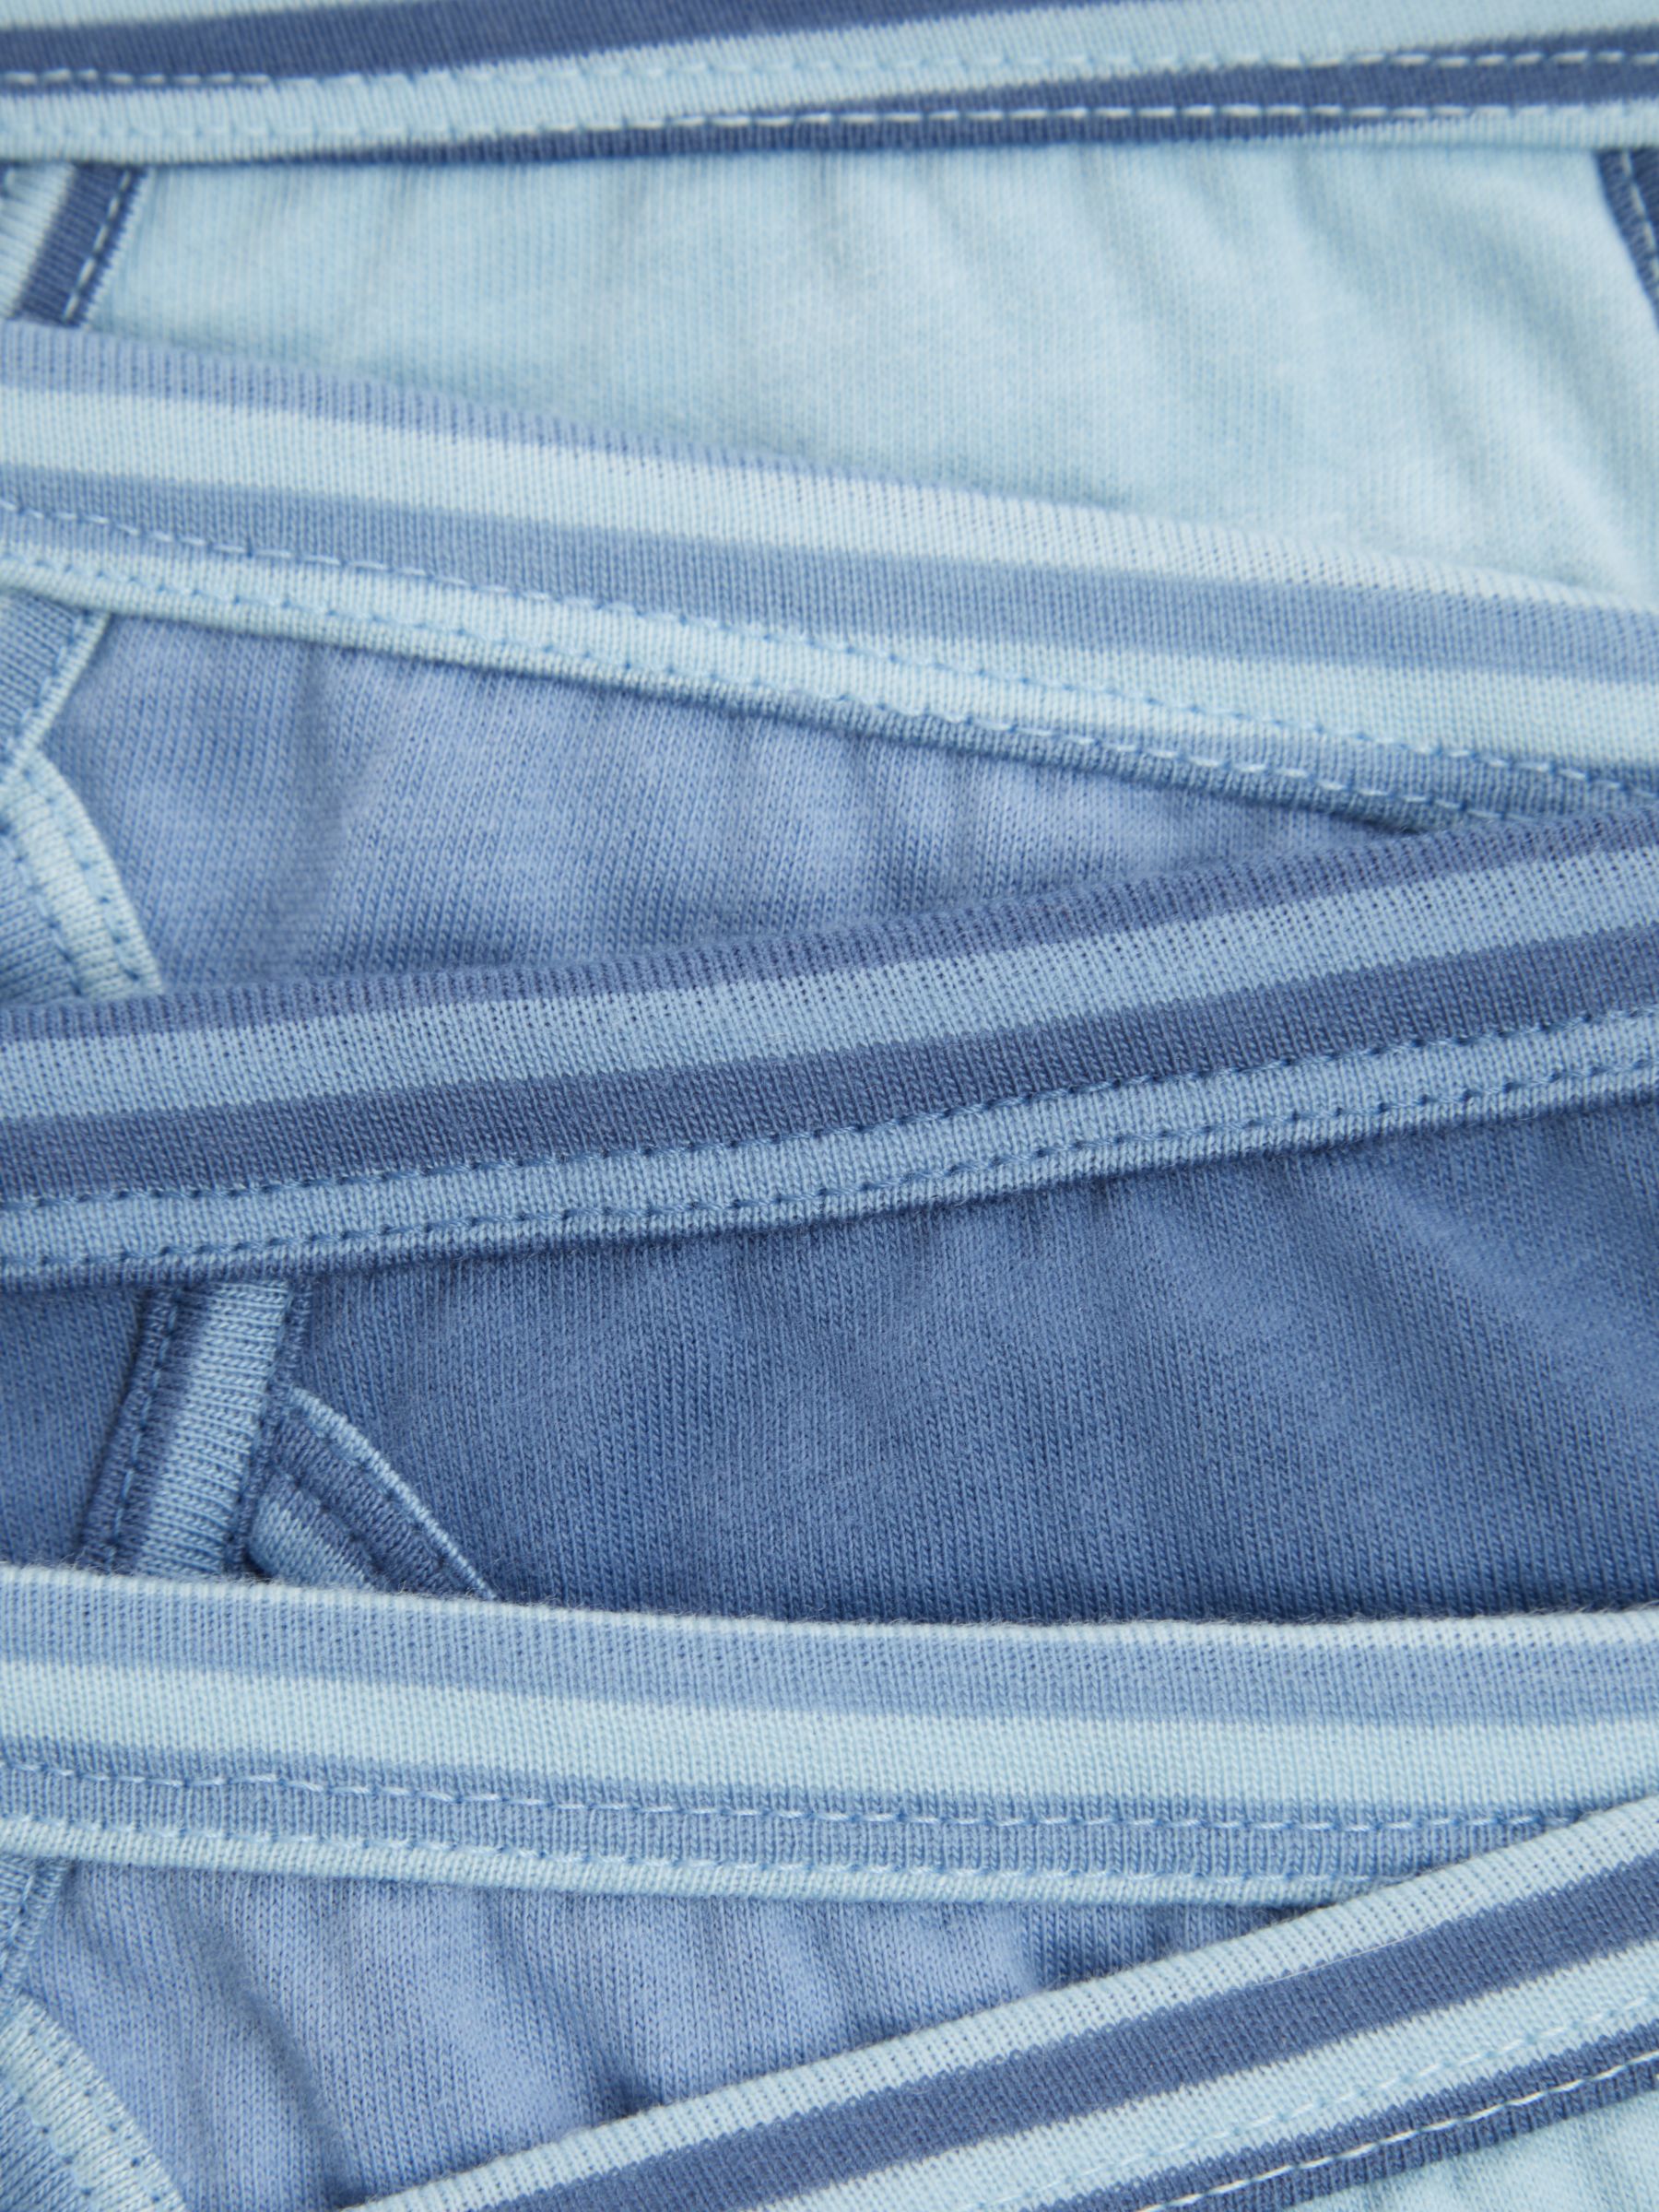 Ex John Lewis kids boys pack of 10 ASSORTED Briefs Underwear pants